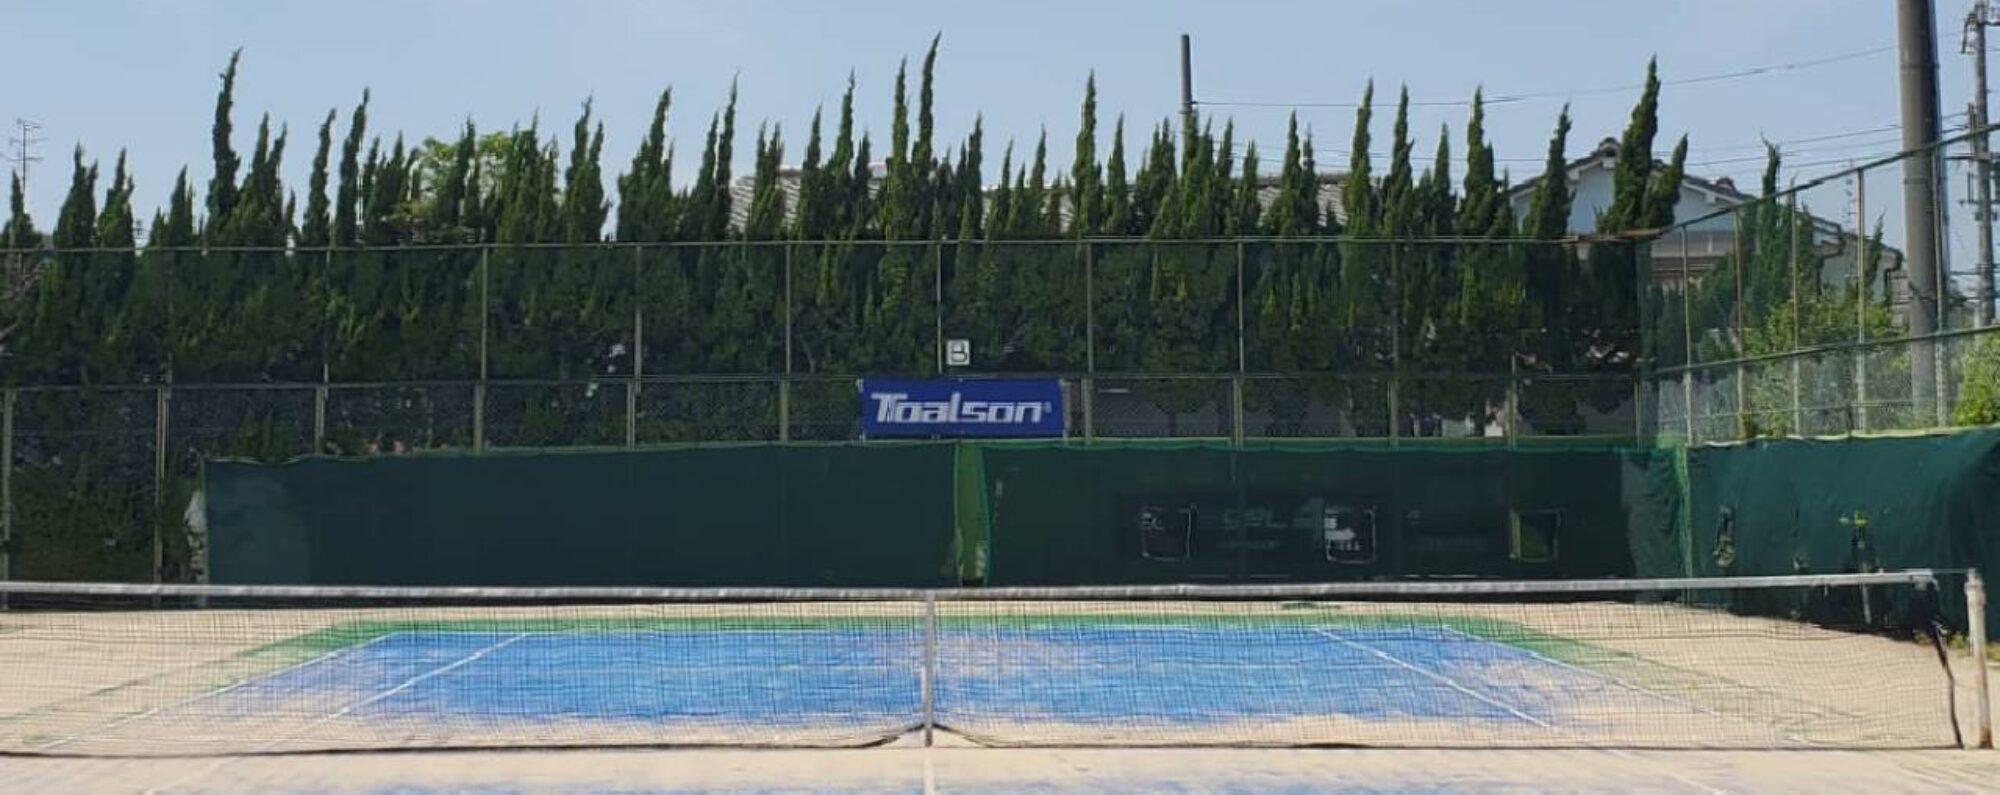 Keepsmiling Tennis Park